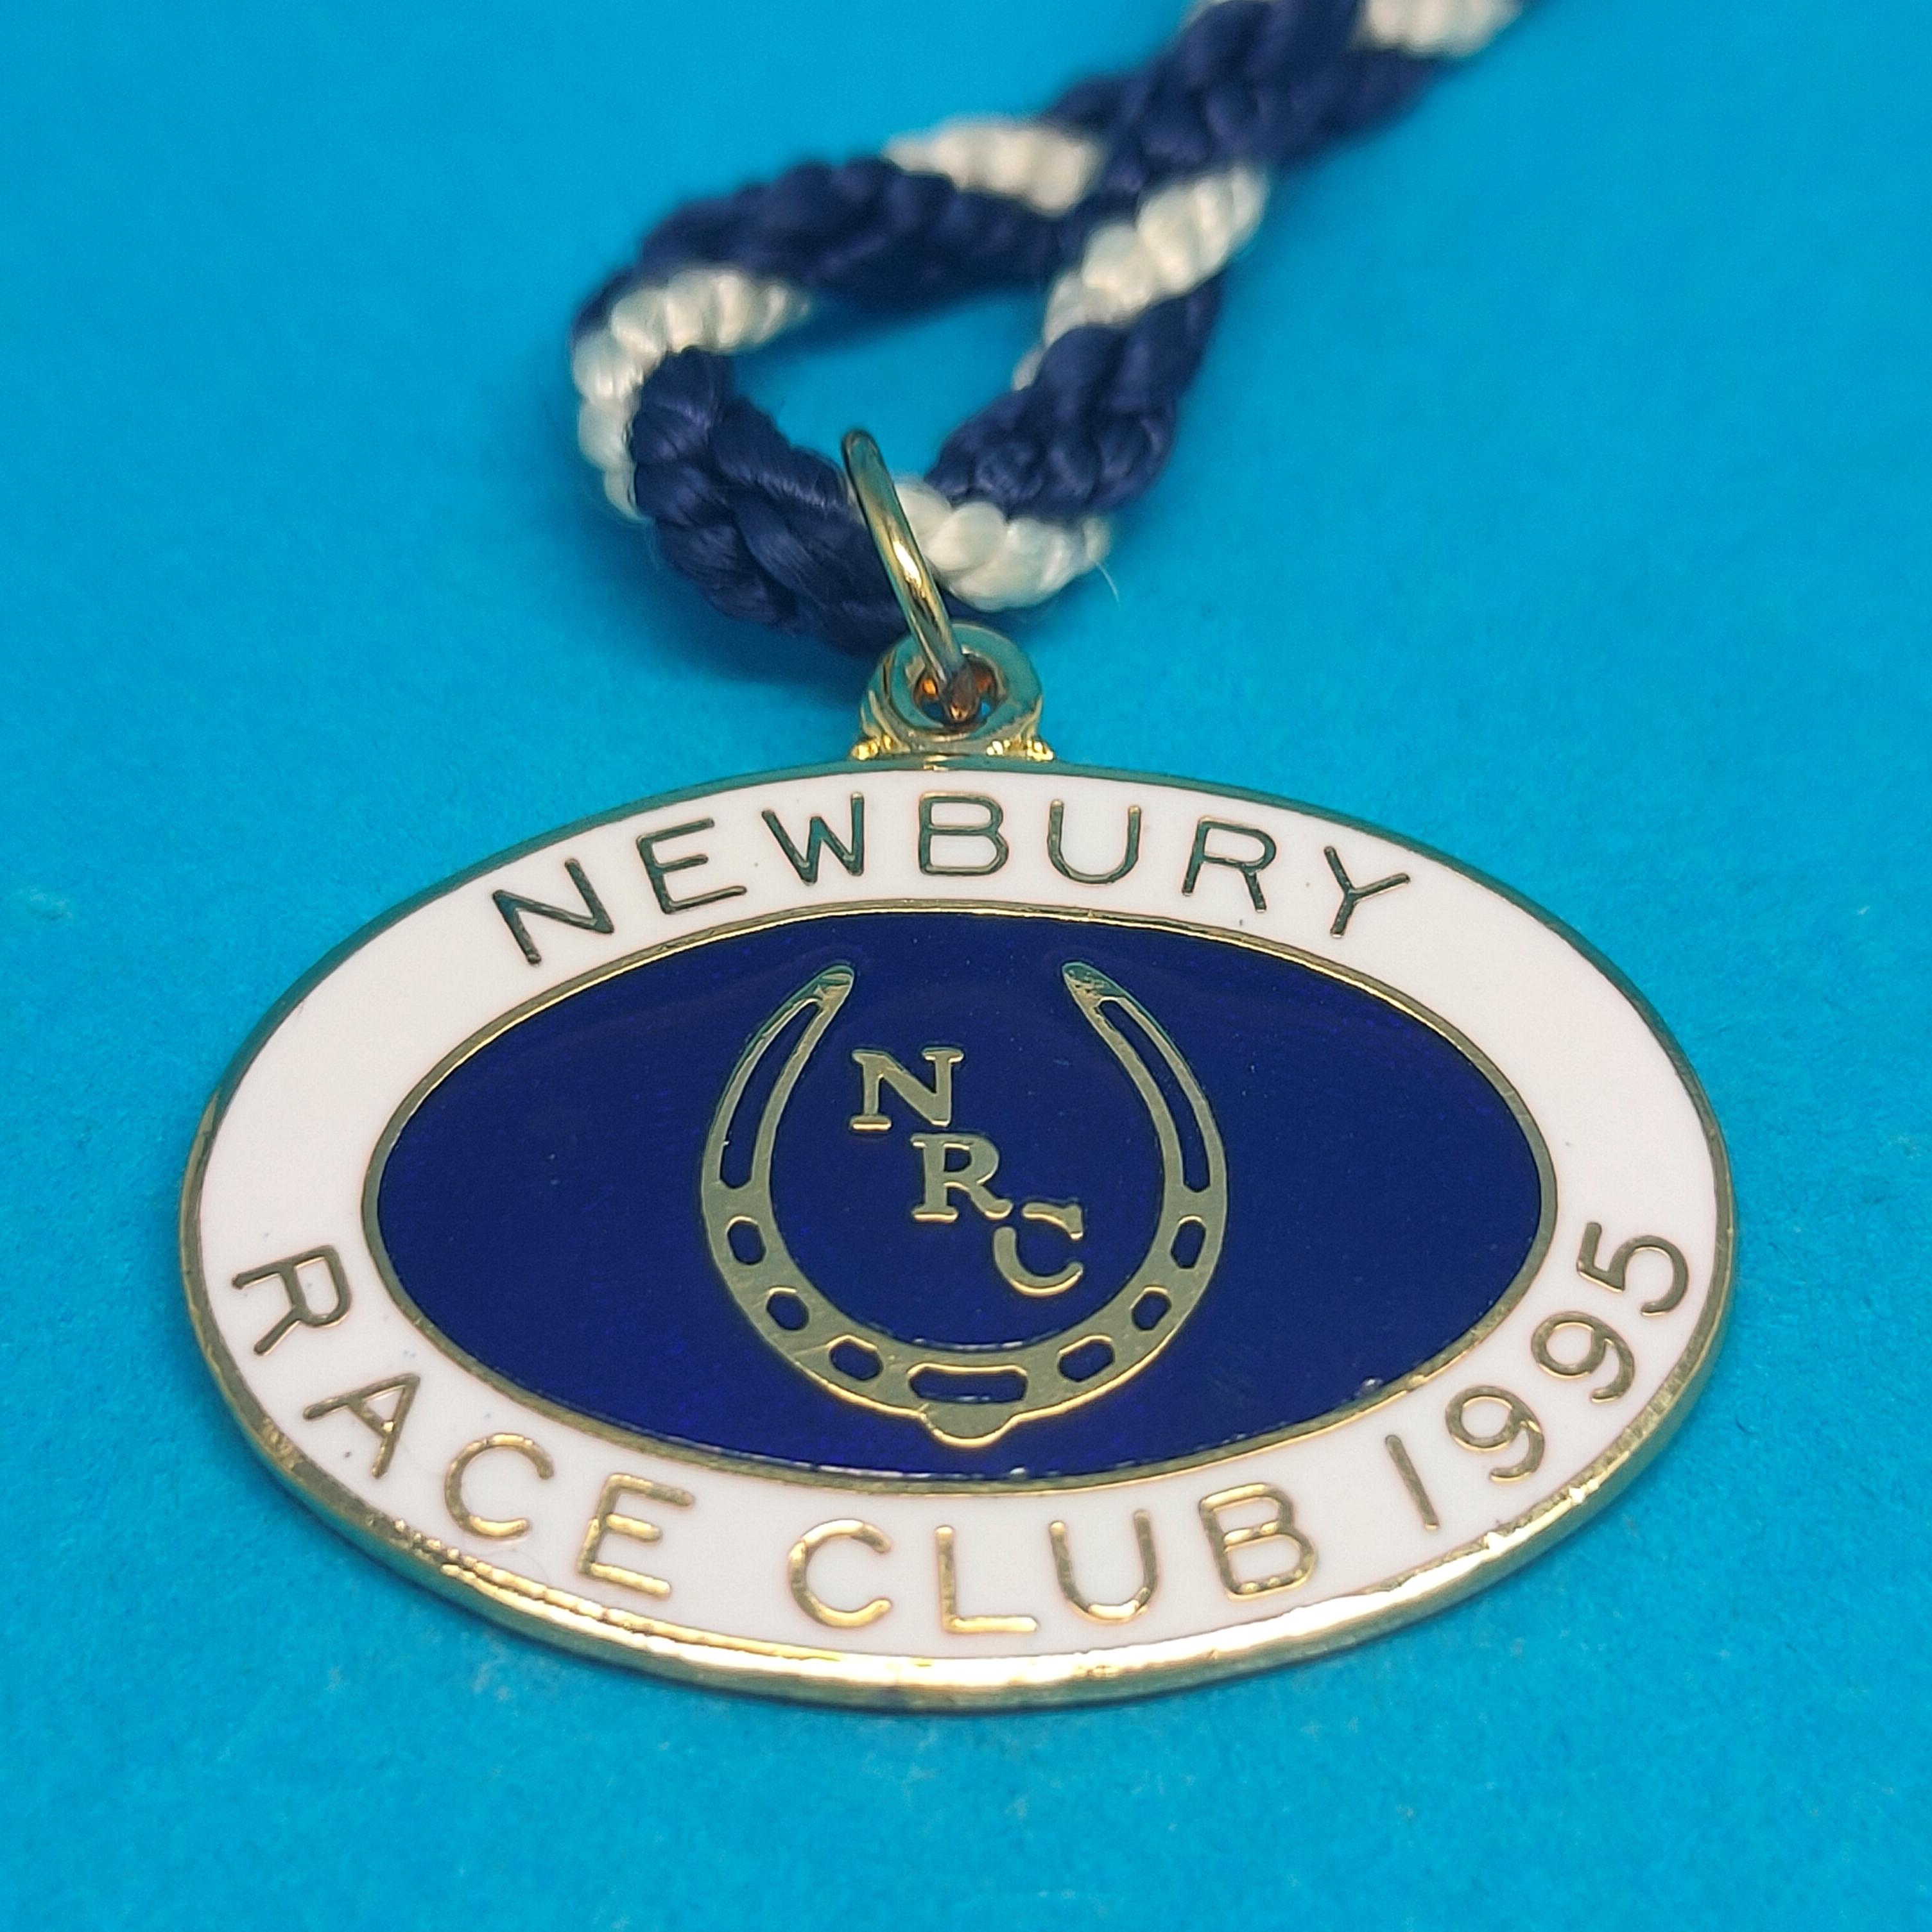 Newbury Junior 1995